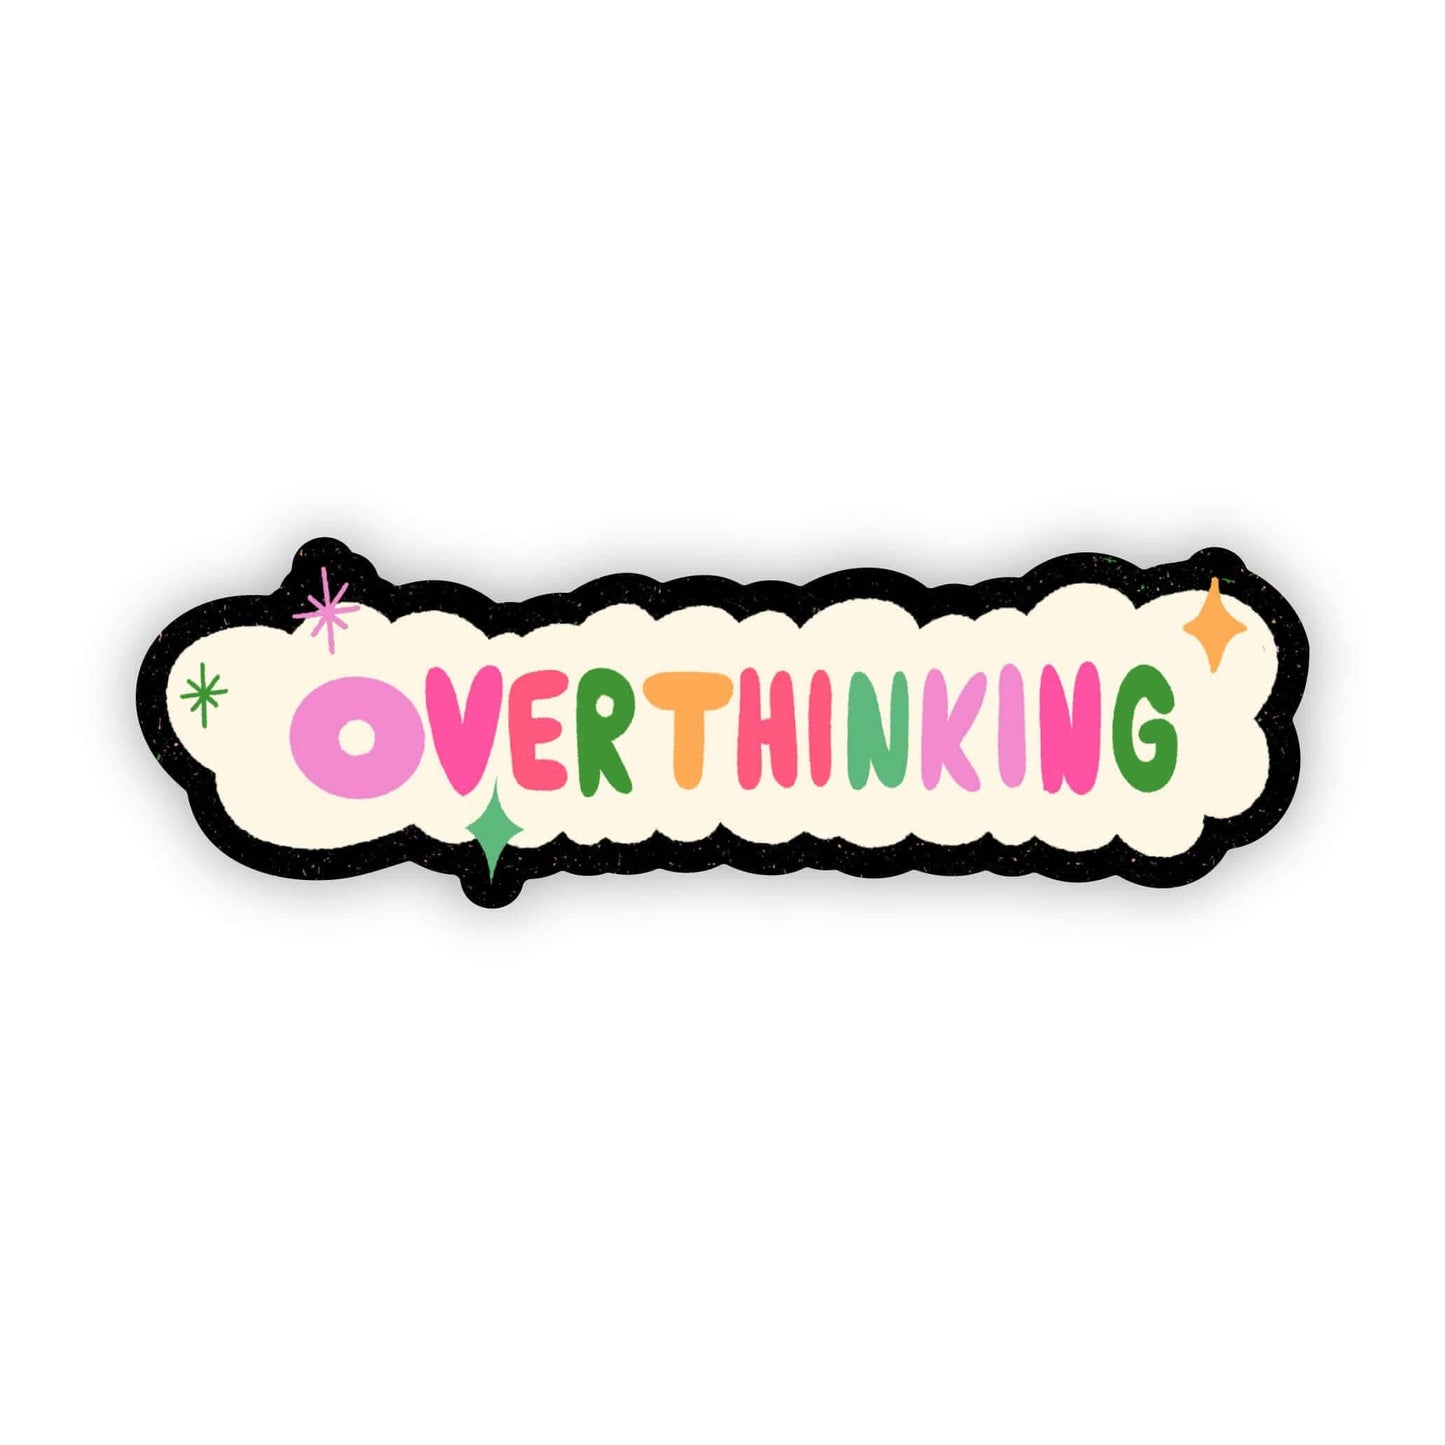 Overthinking sticker